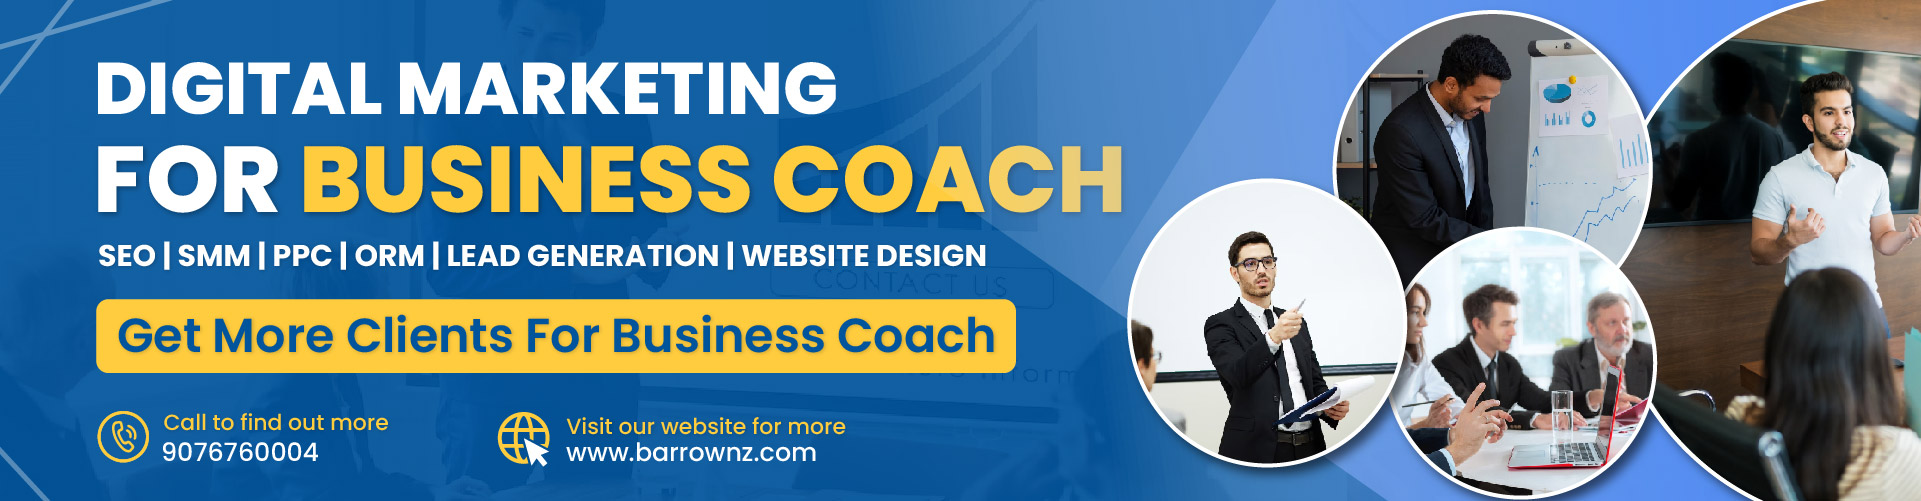 business_coach_banner